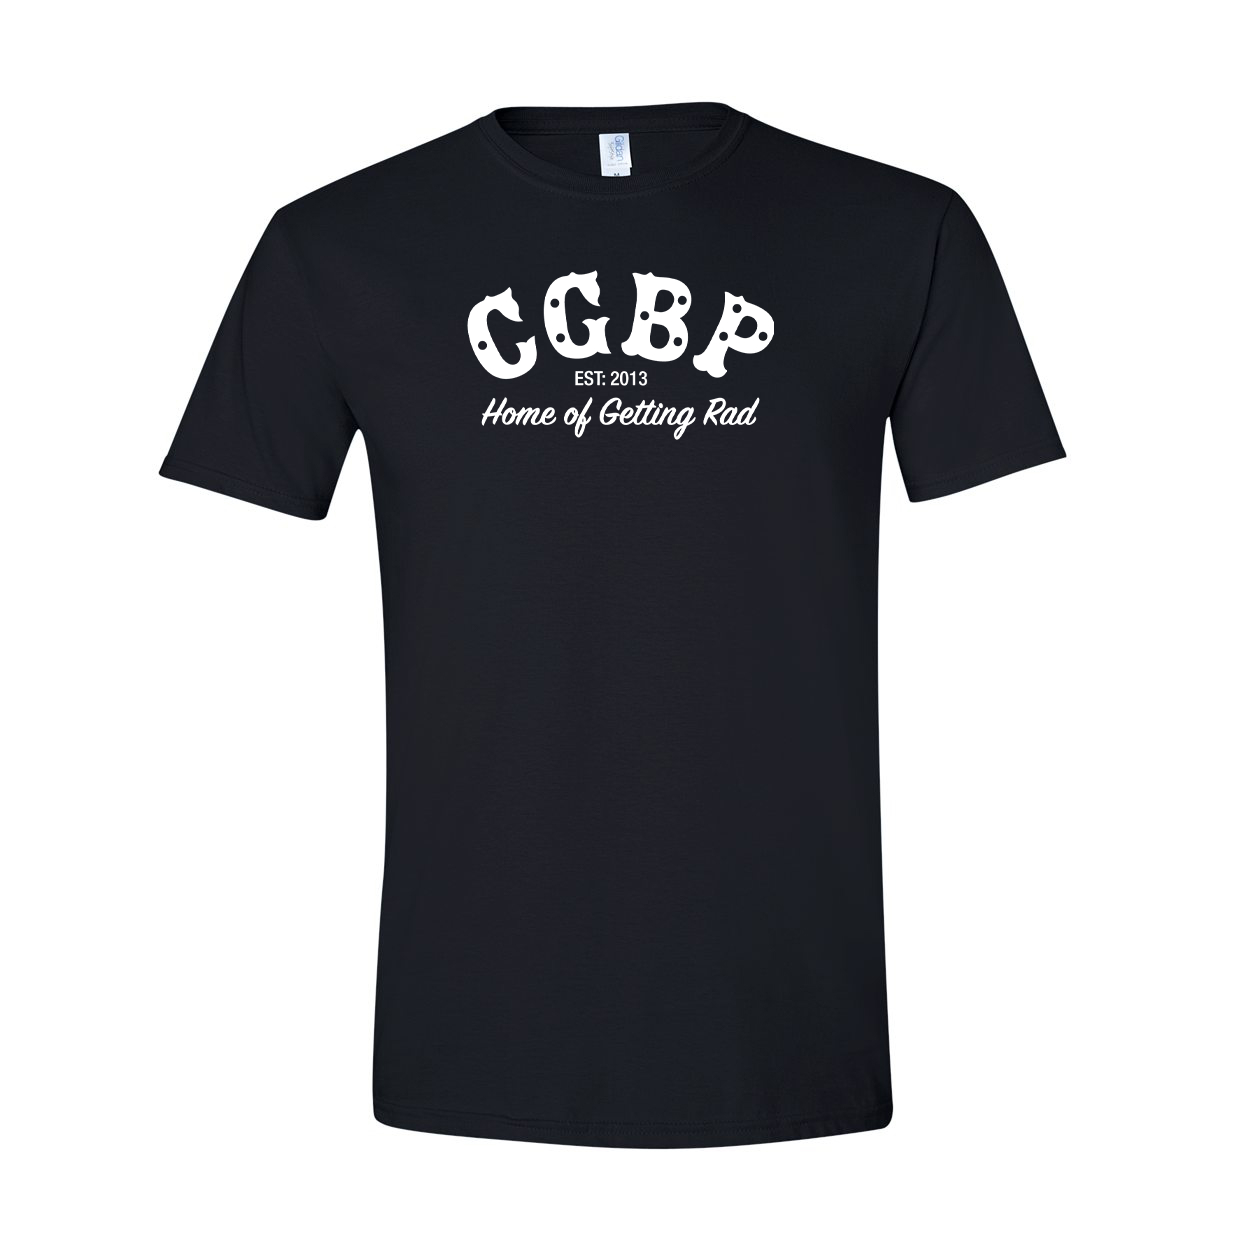 Cottage Grove Bike Park Classic T-Shirt Black